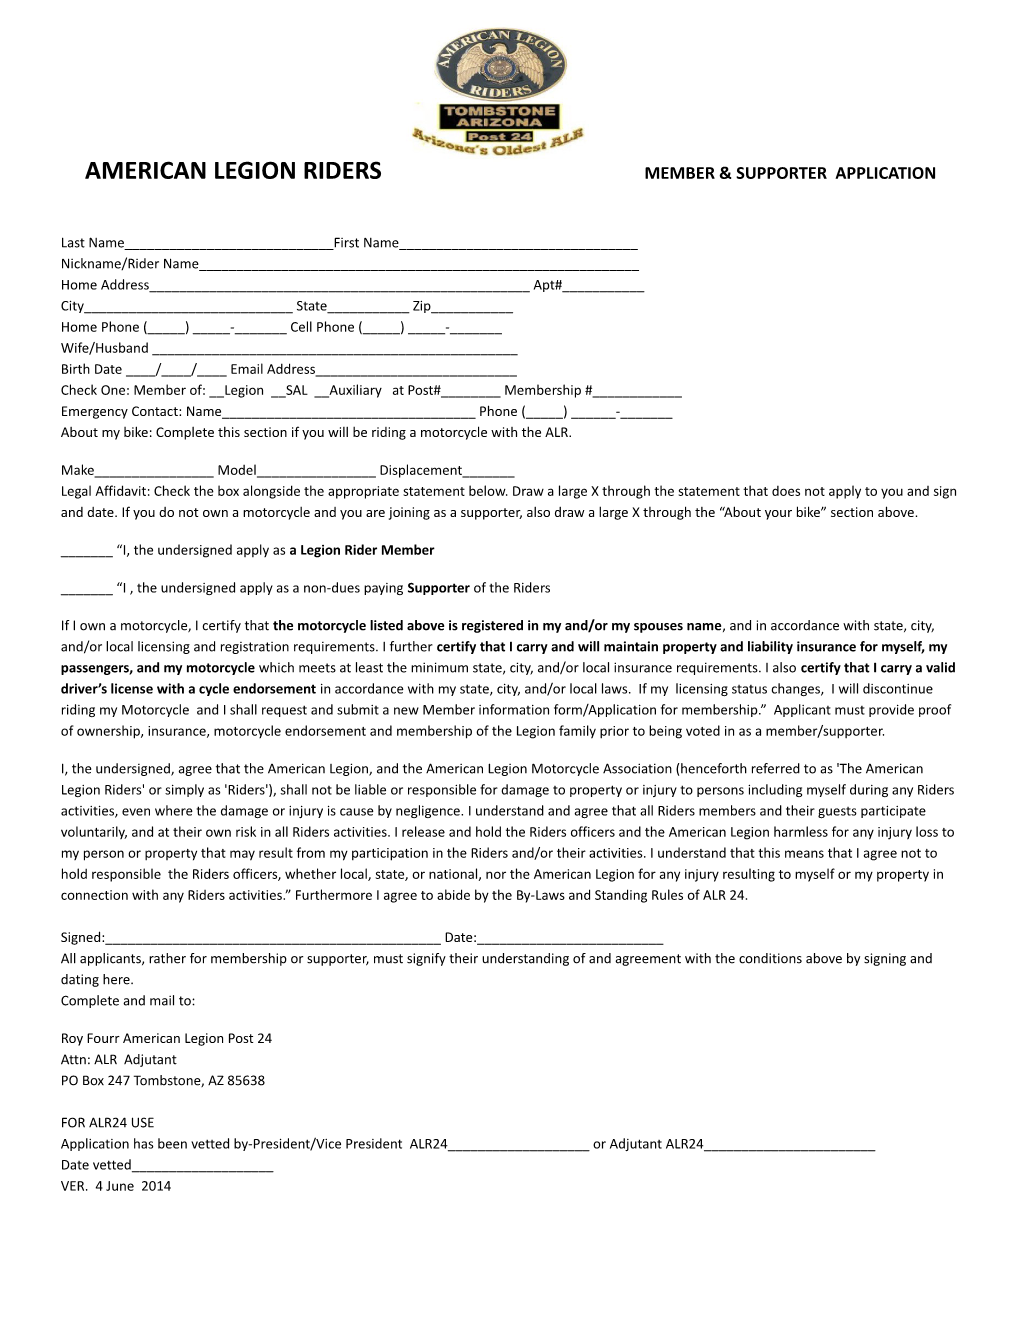 American Legion Riders Member & Supporter Application